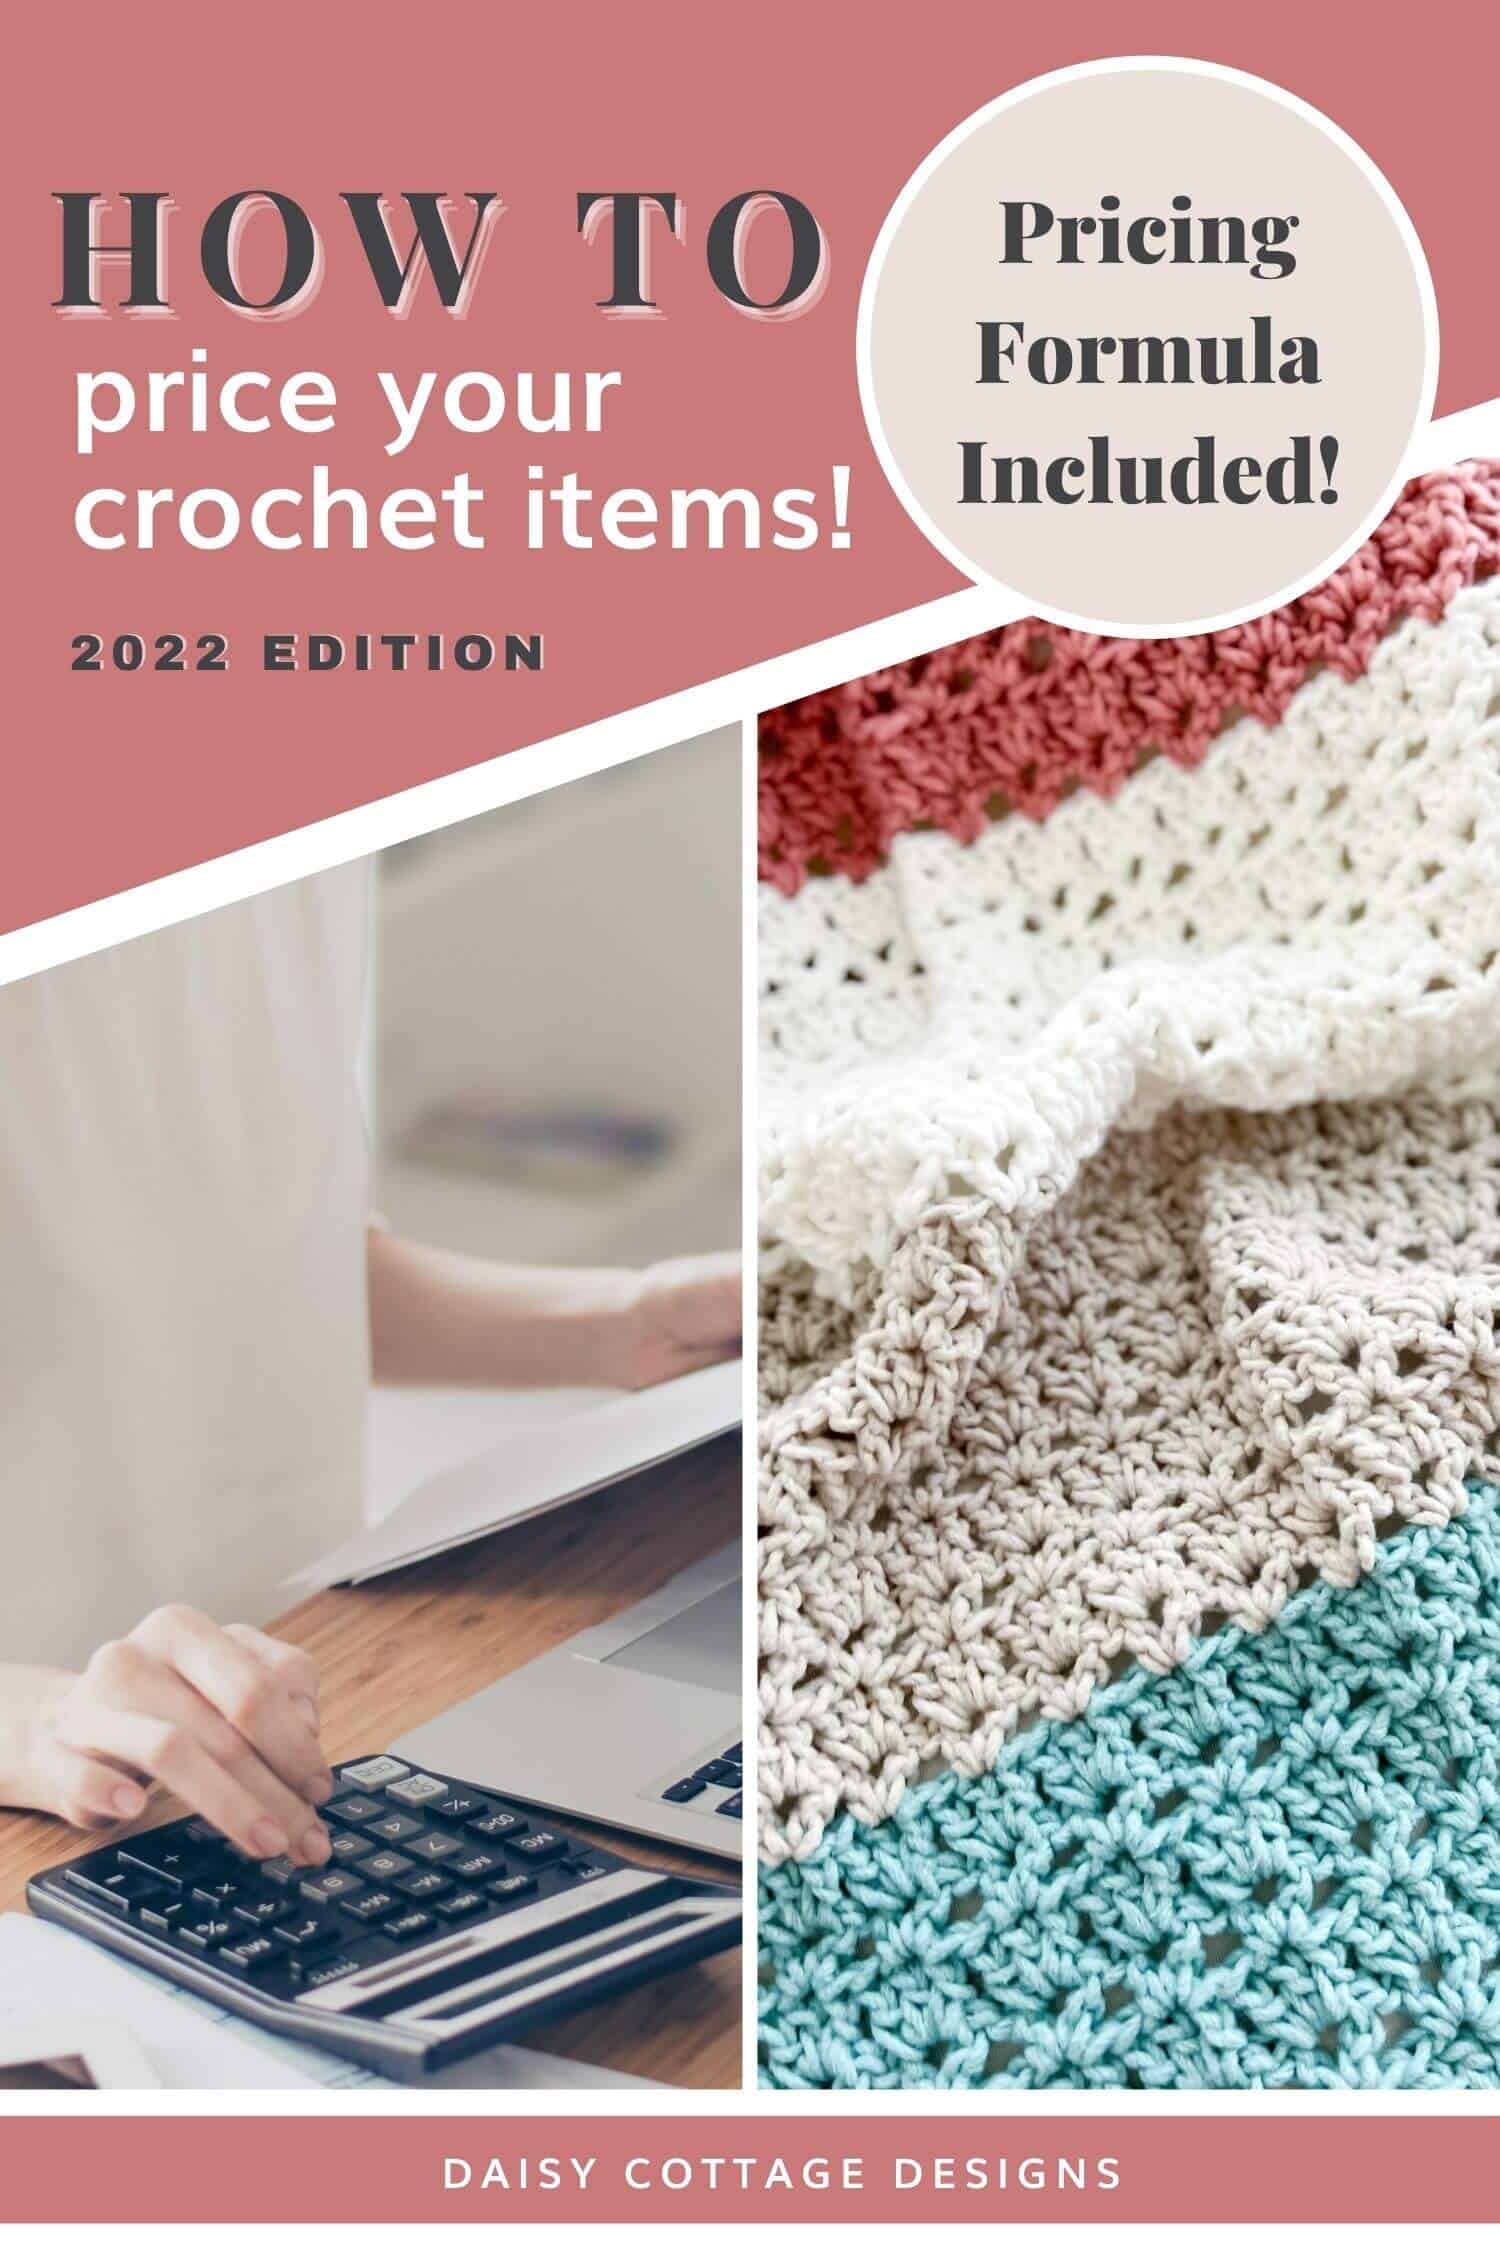 How to Price Crochet Items